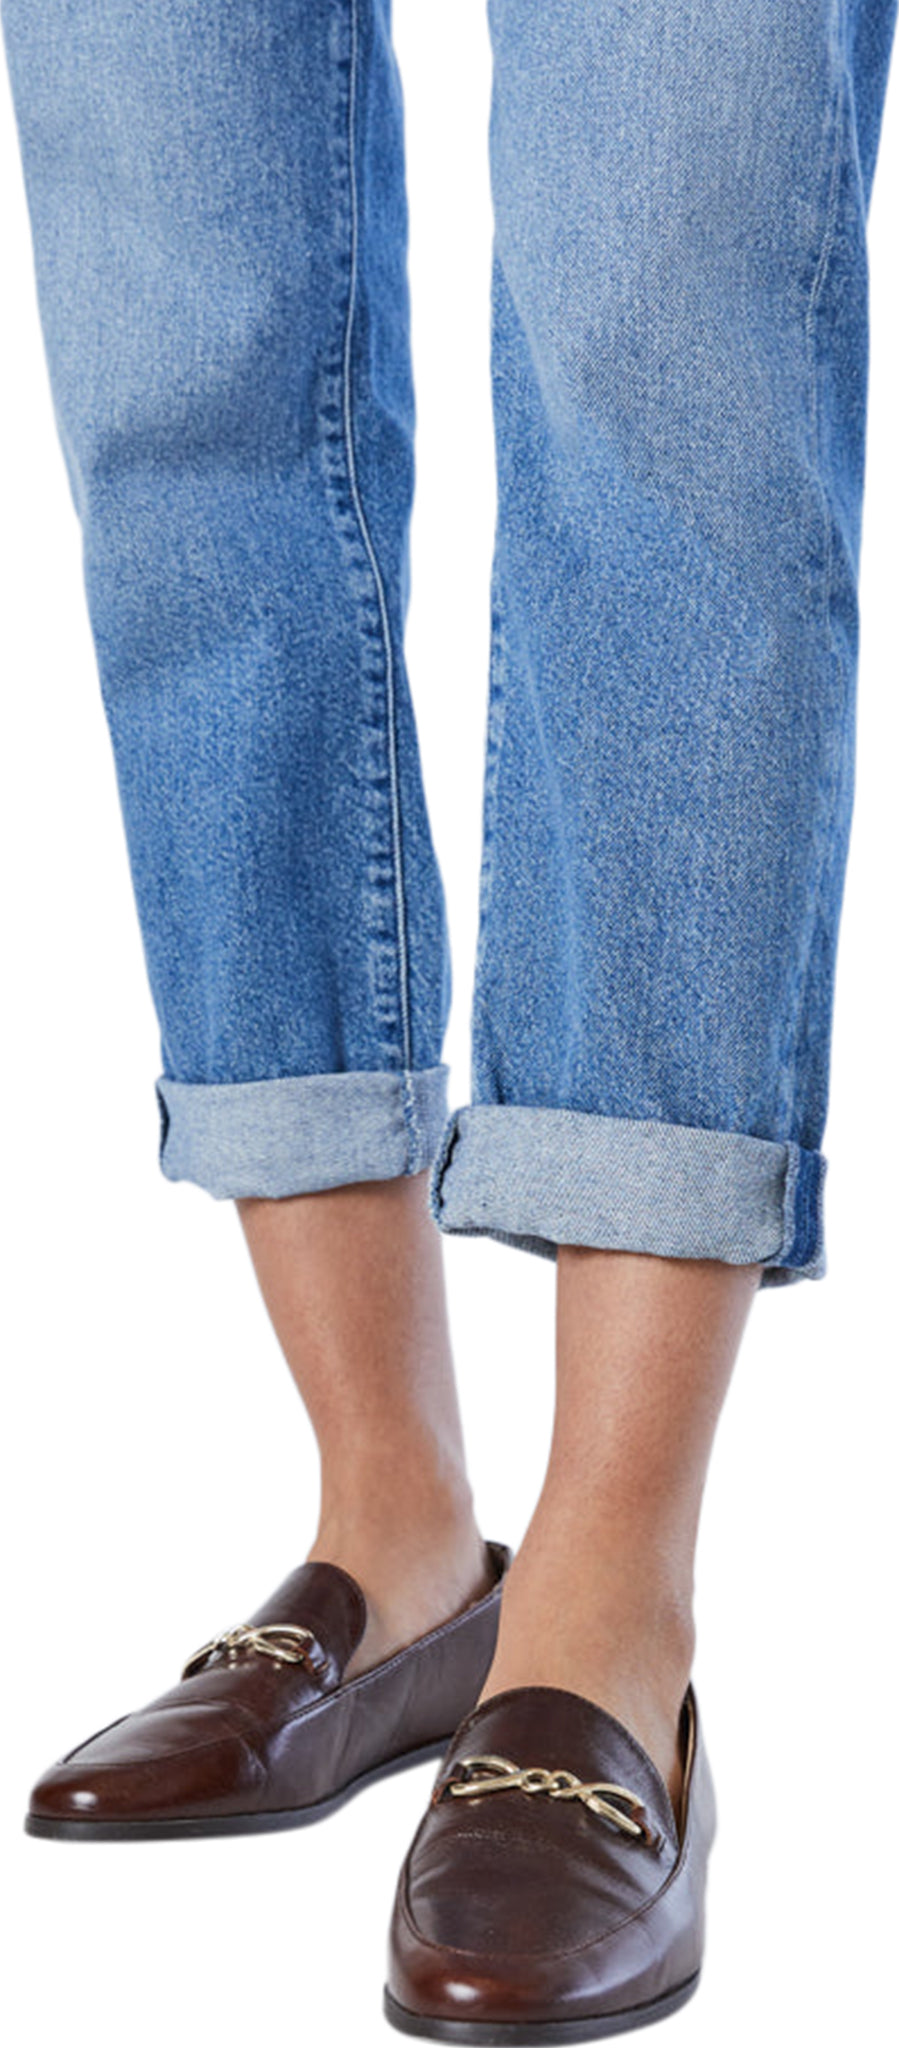 SOHO TAPERED LEG JEANS IN MID ORGANIC BLUE, Mavi Jeans